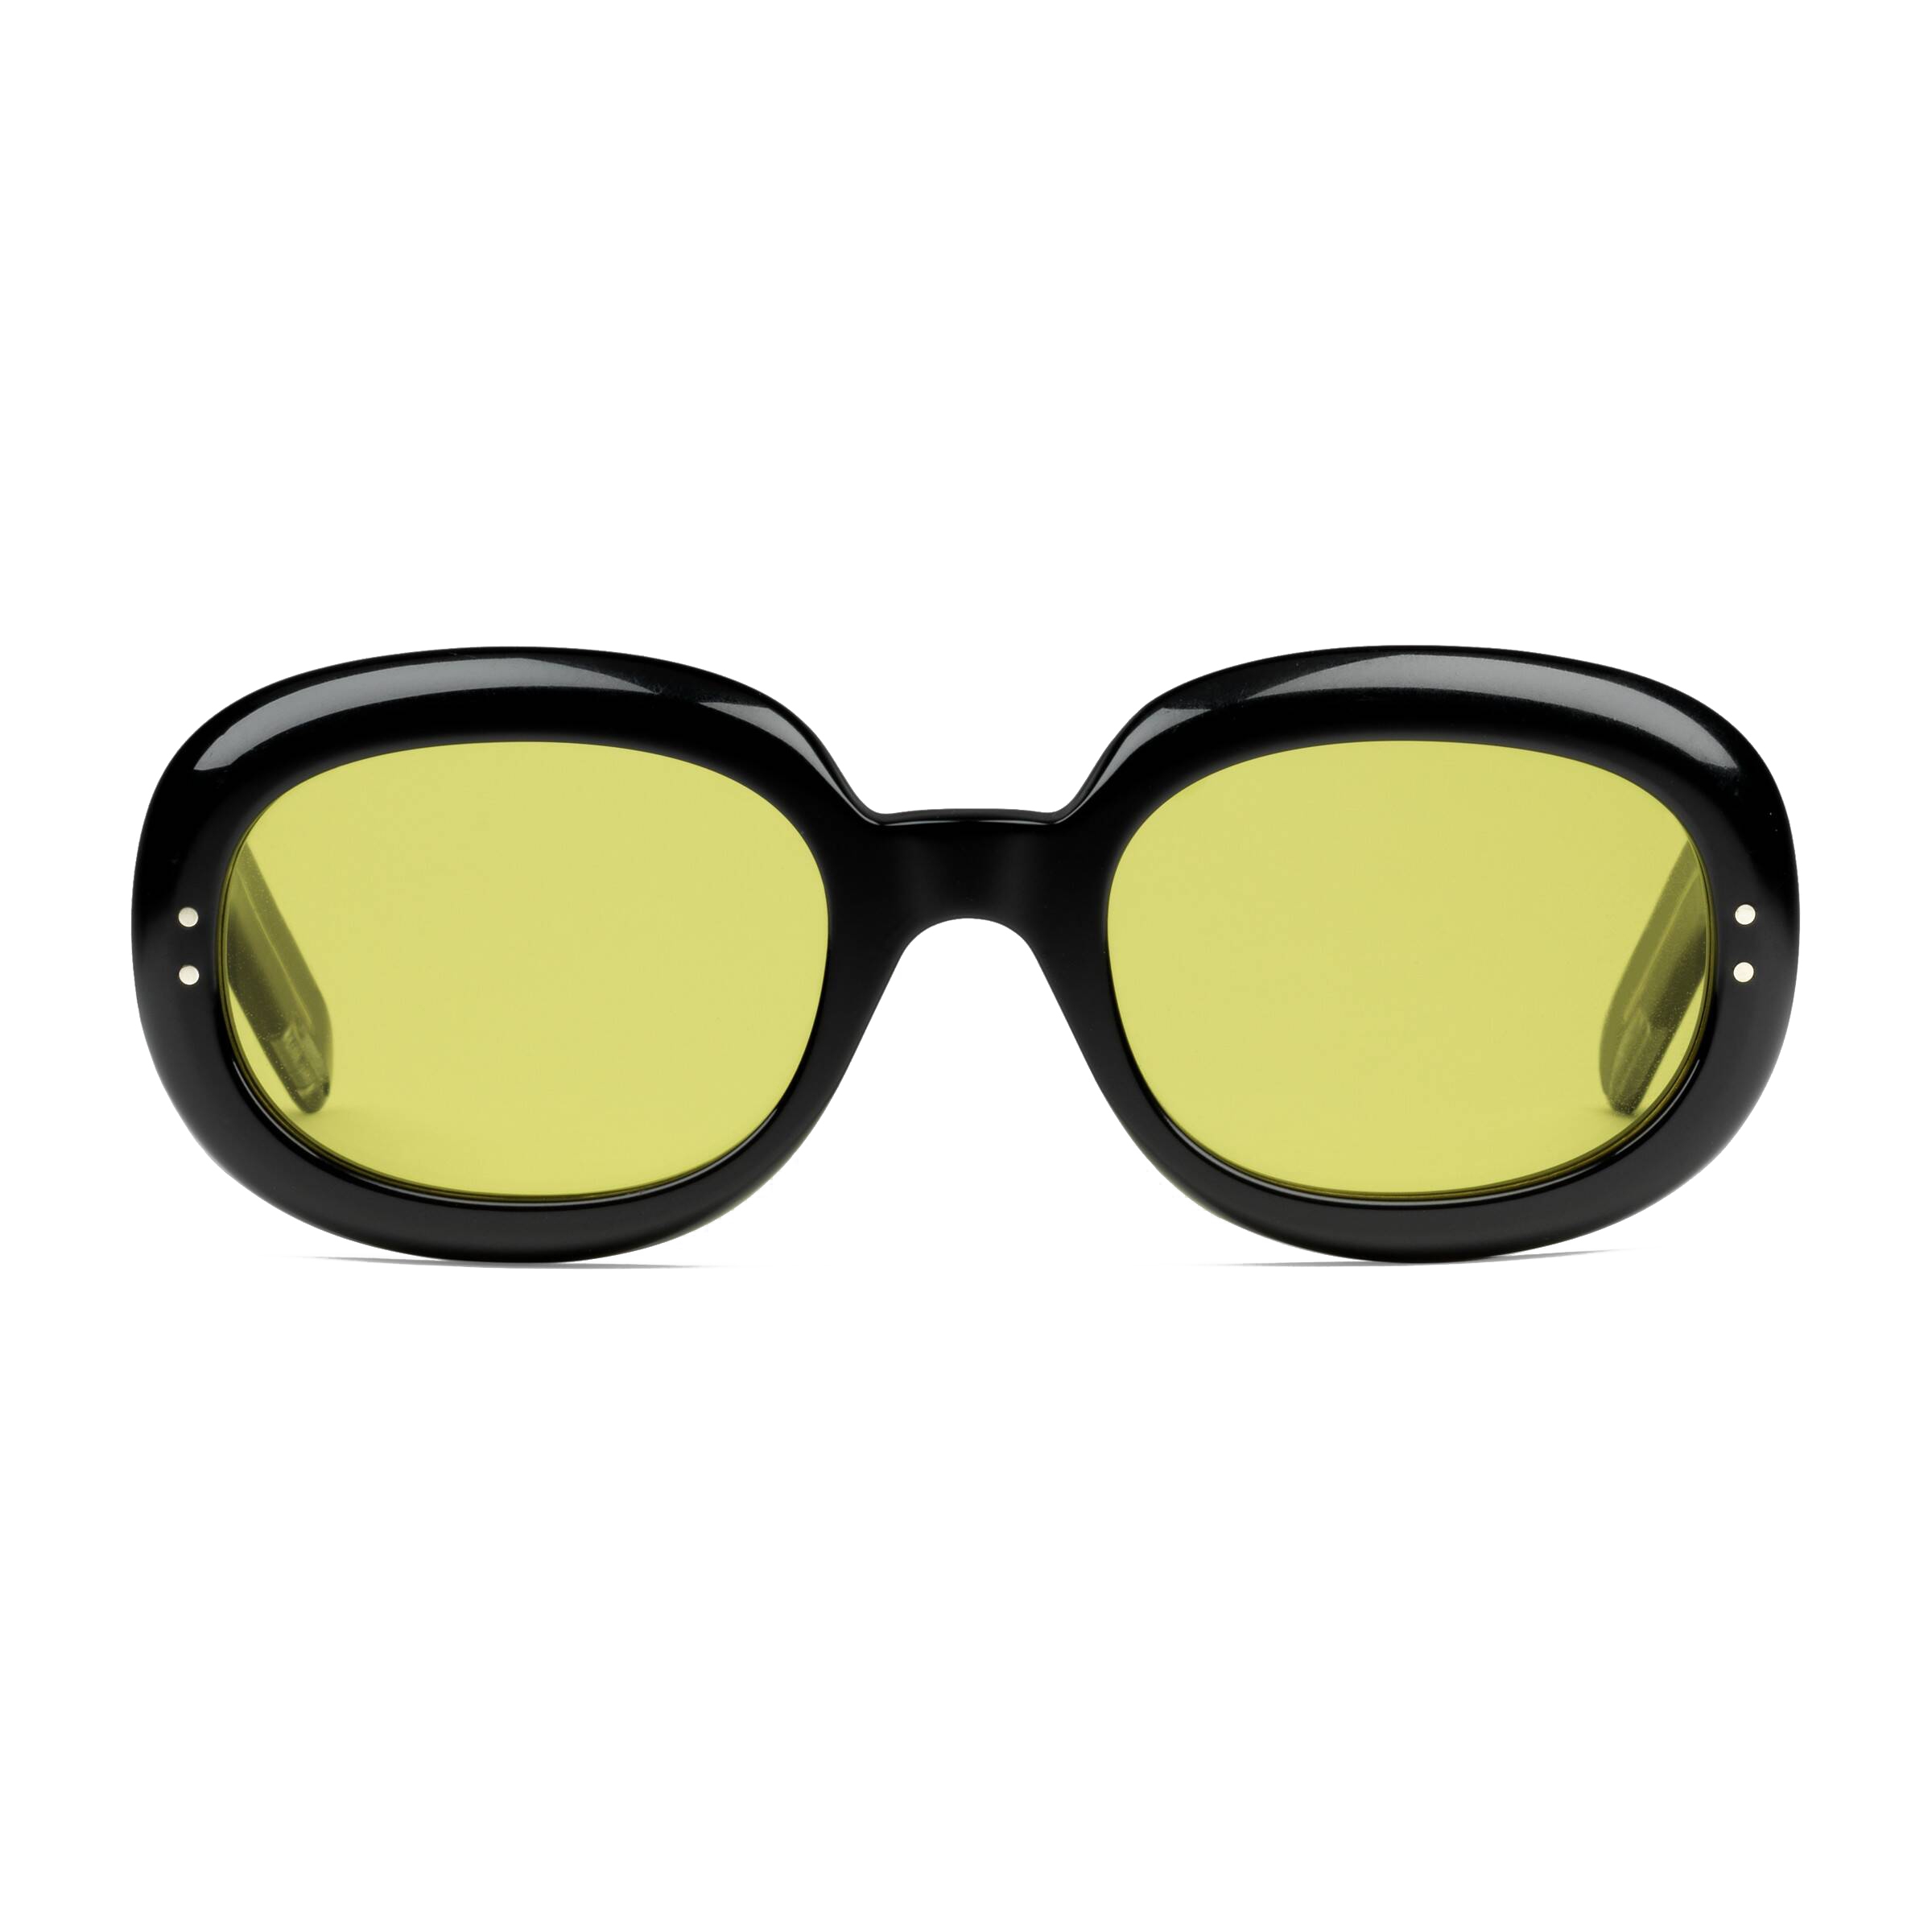 yellow gucci sunglasses